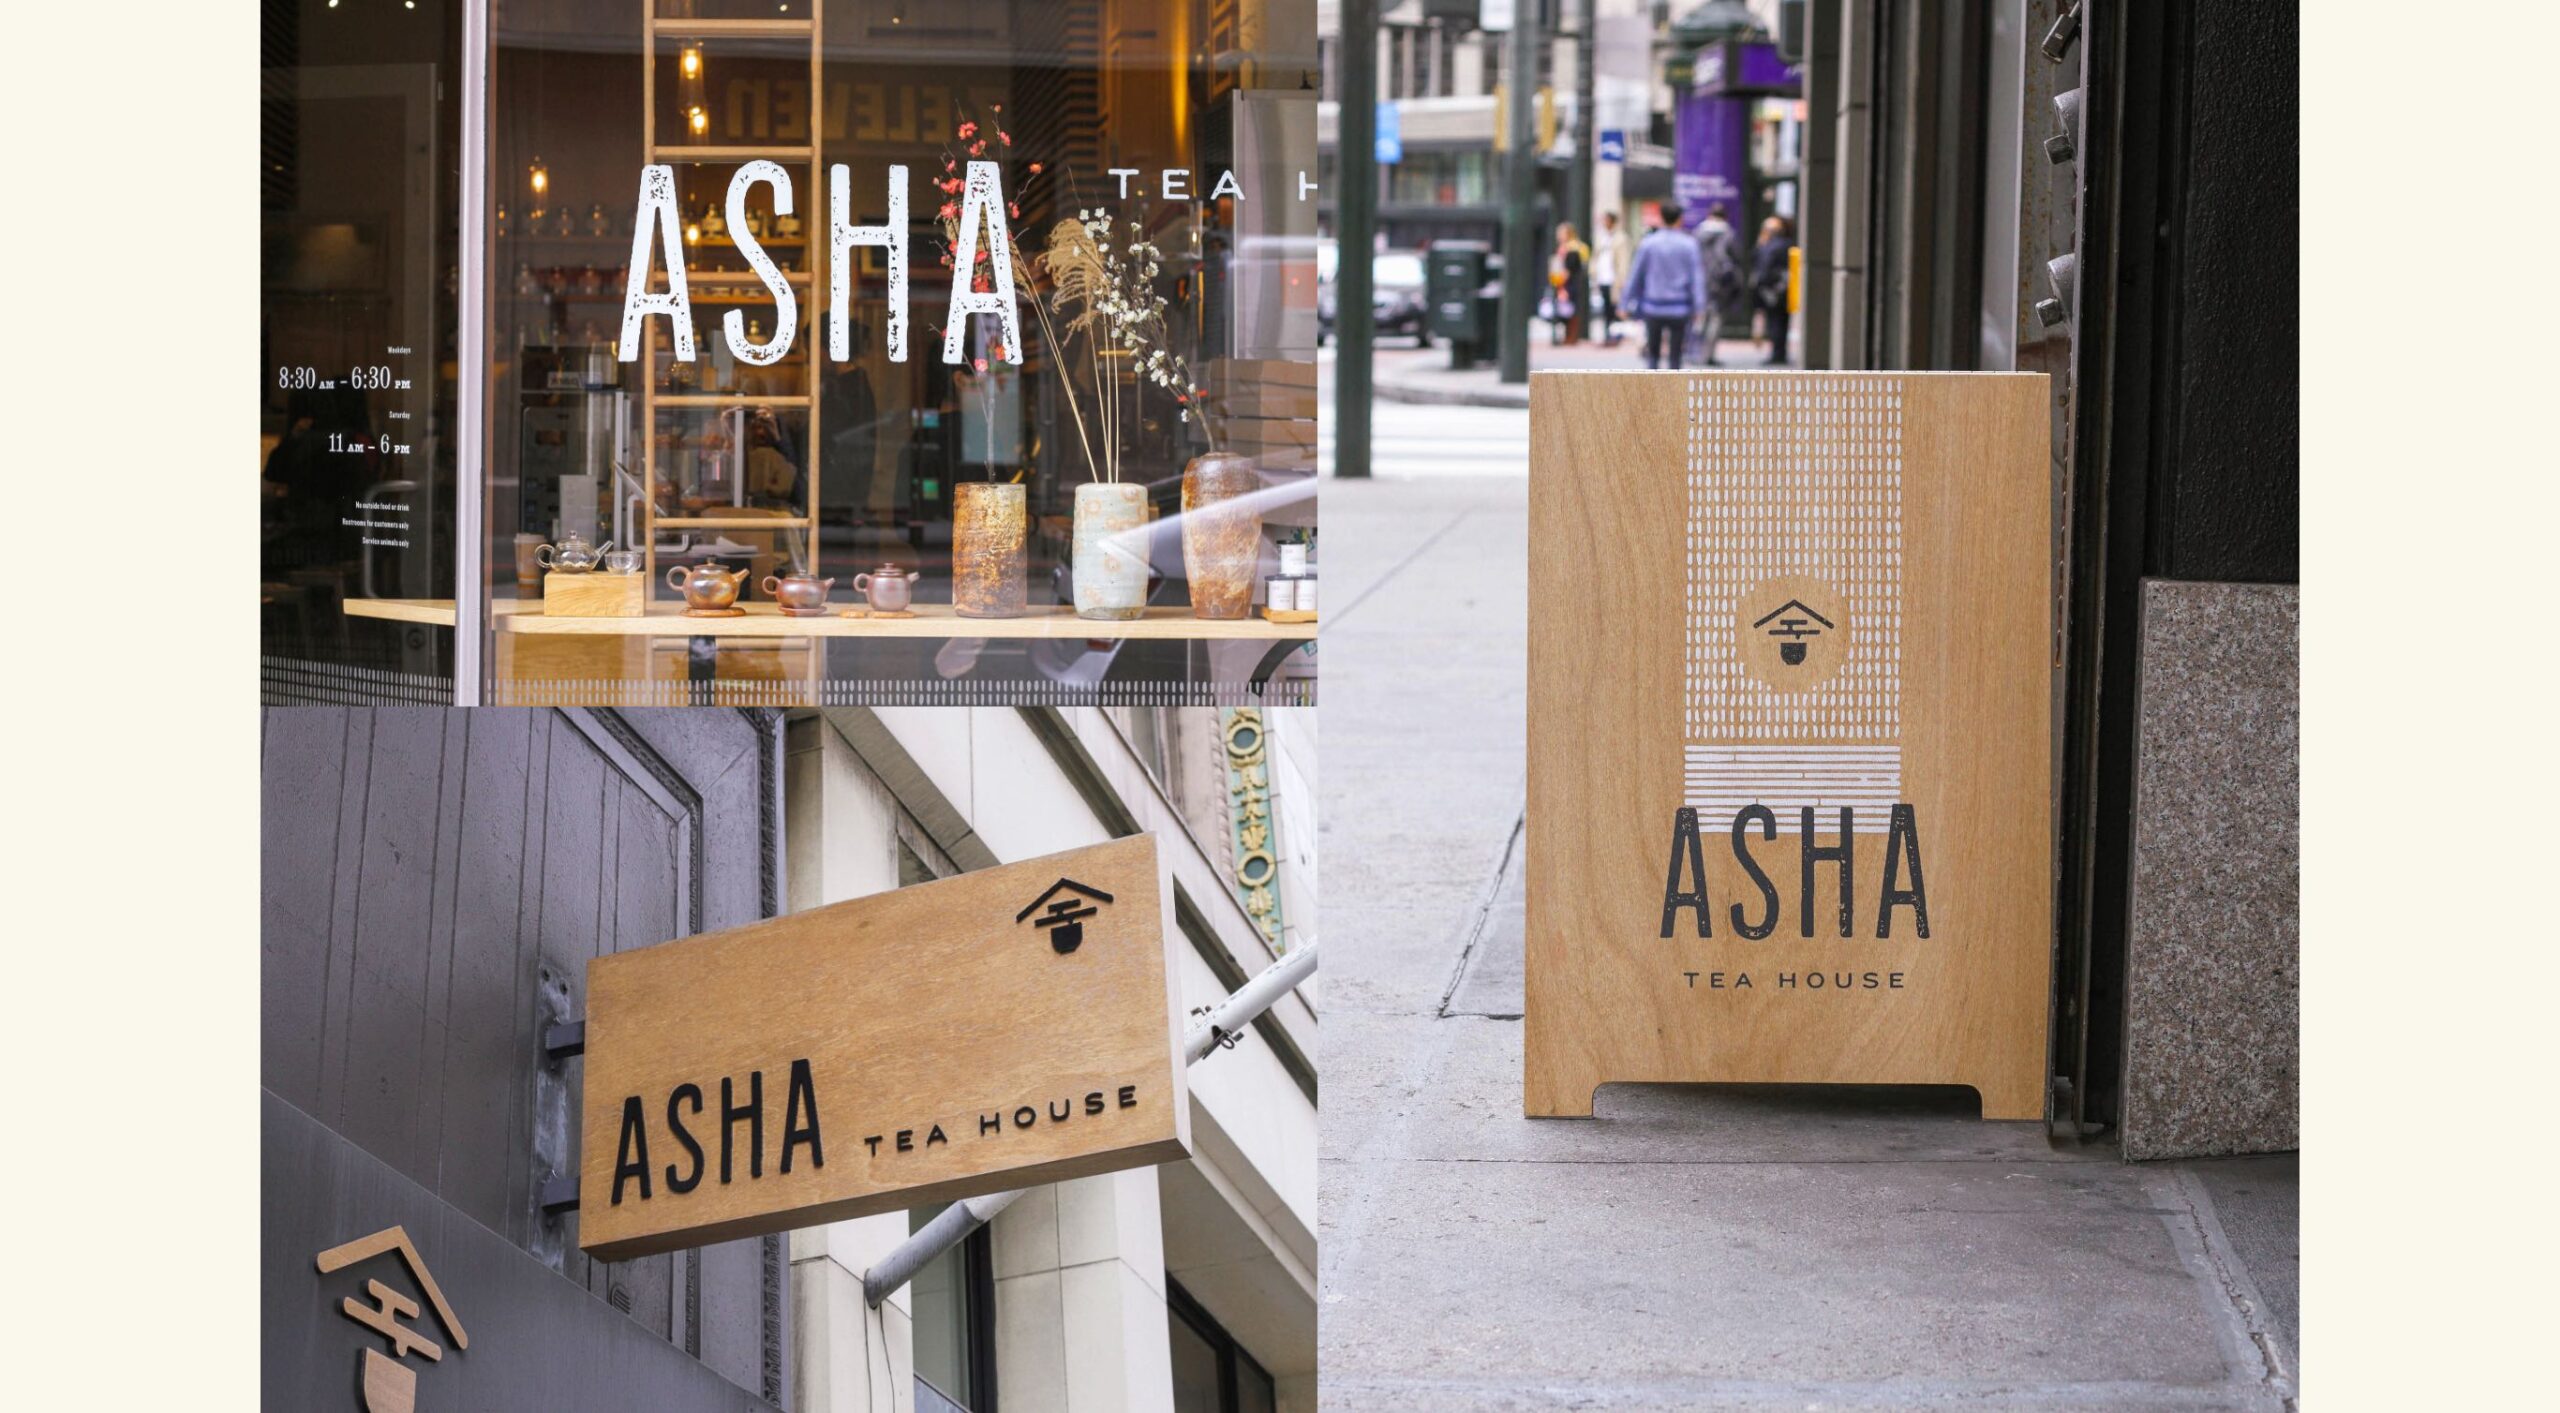 Asha Tea House signage collection